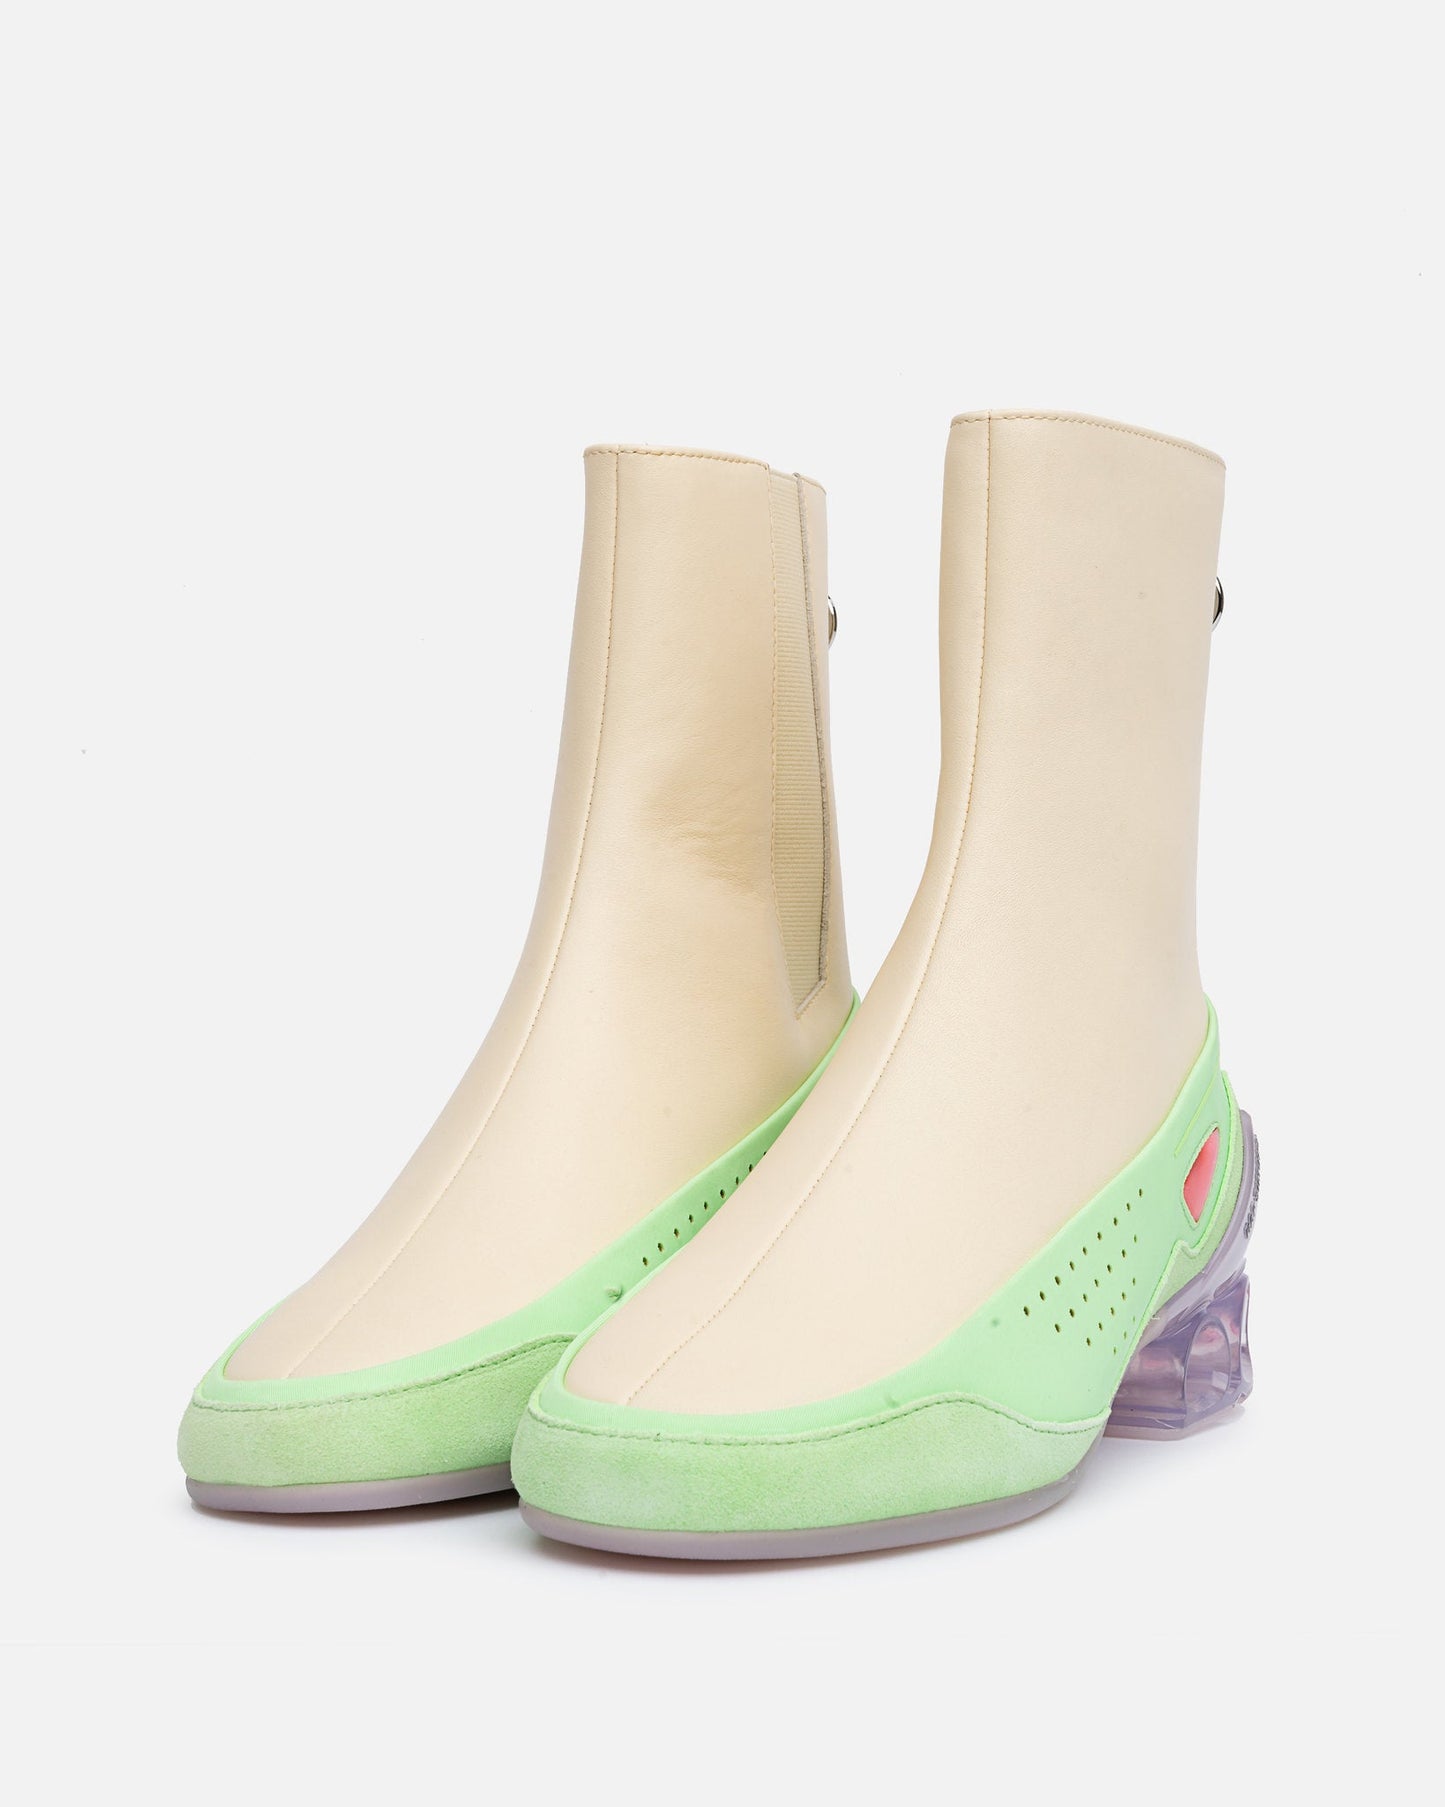 Raf Simons Men's Sneakers Cycloid-4 in Cream/Pastel Pink